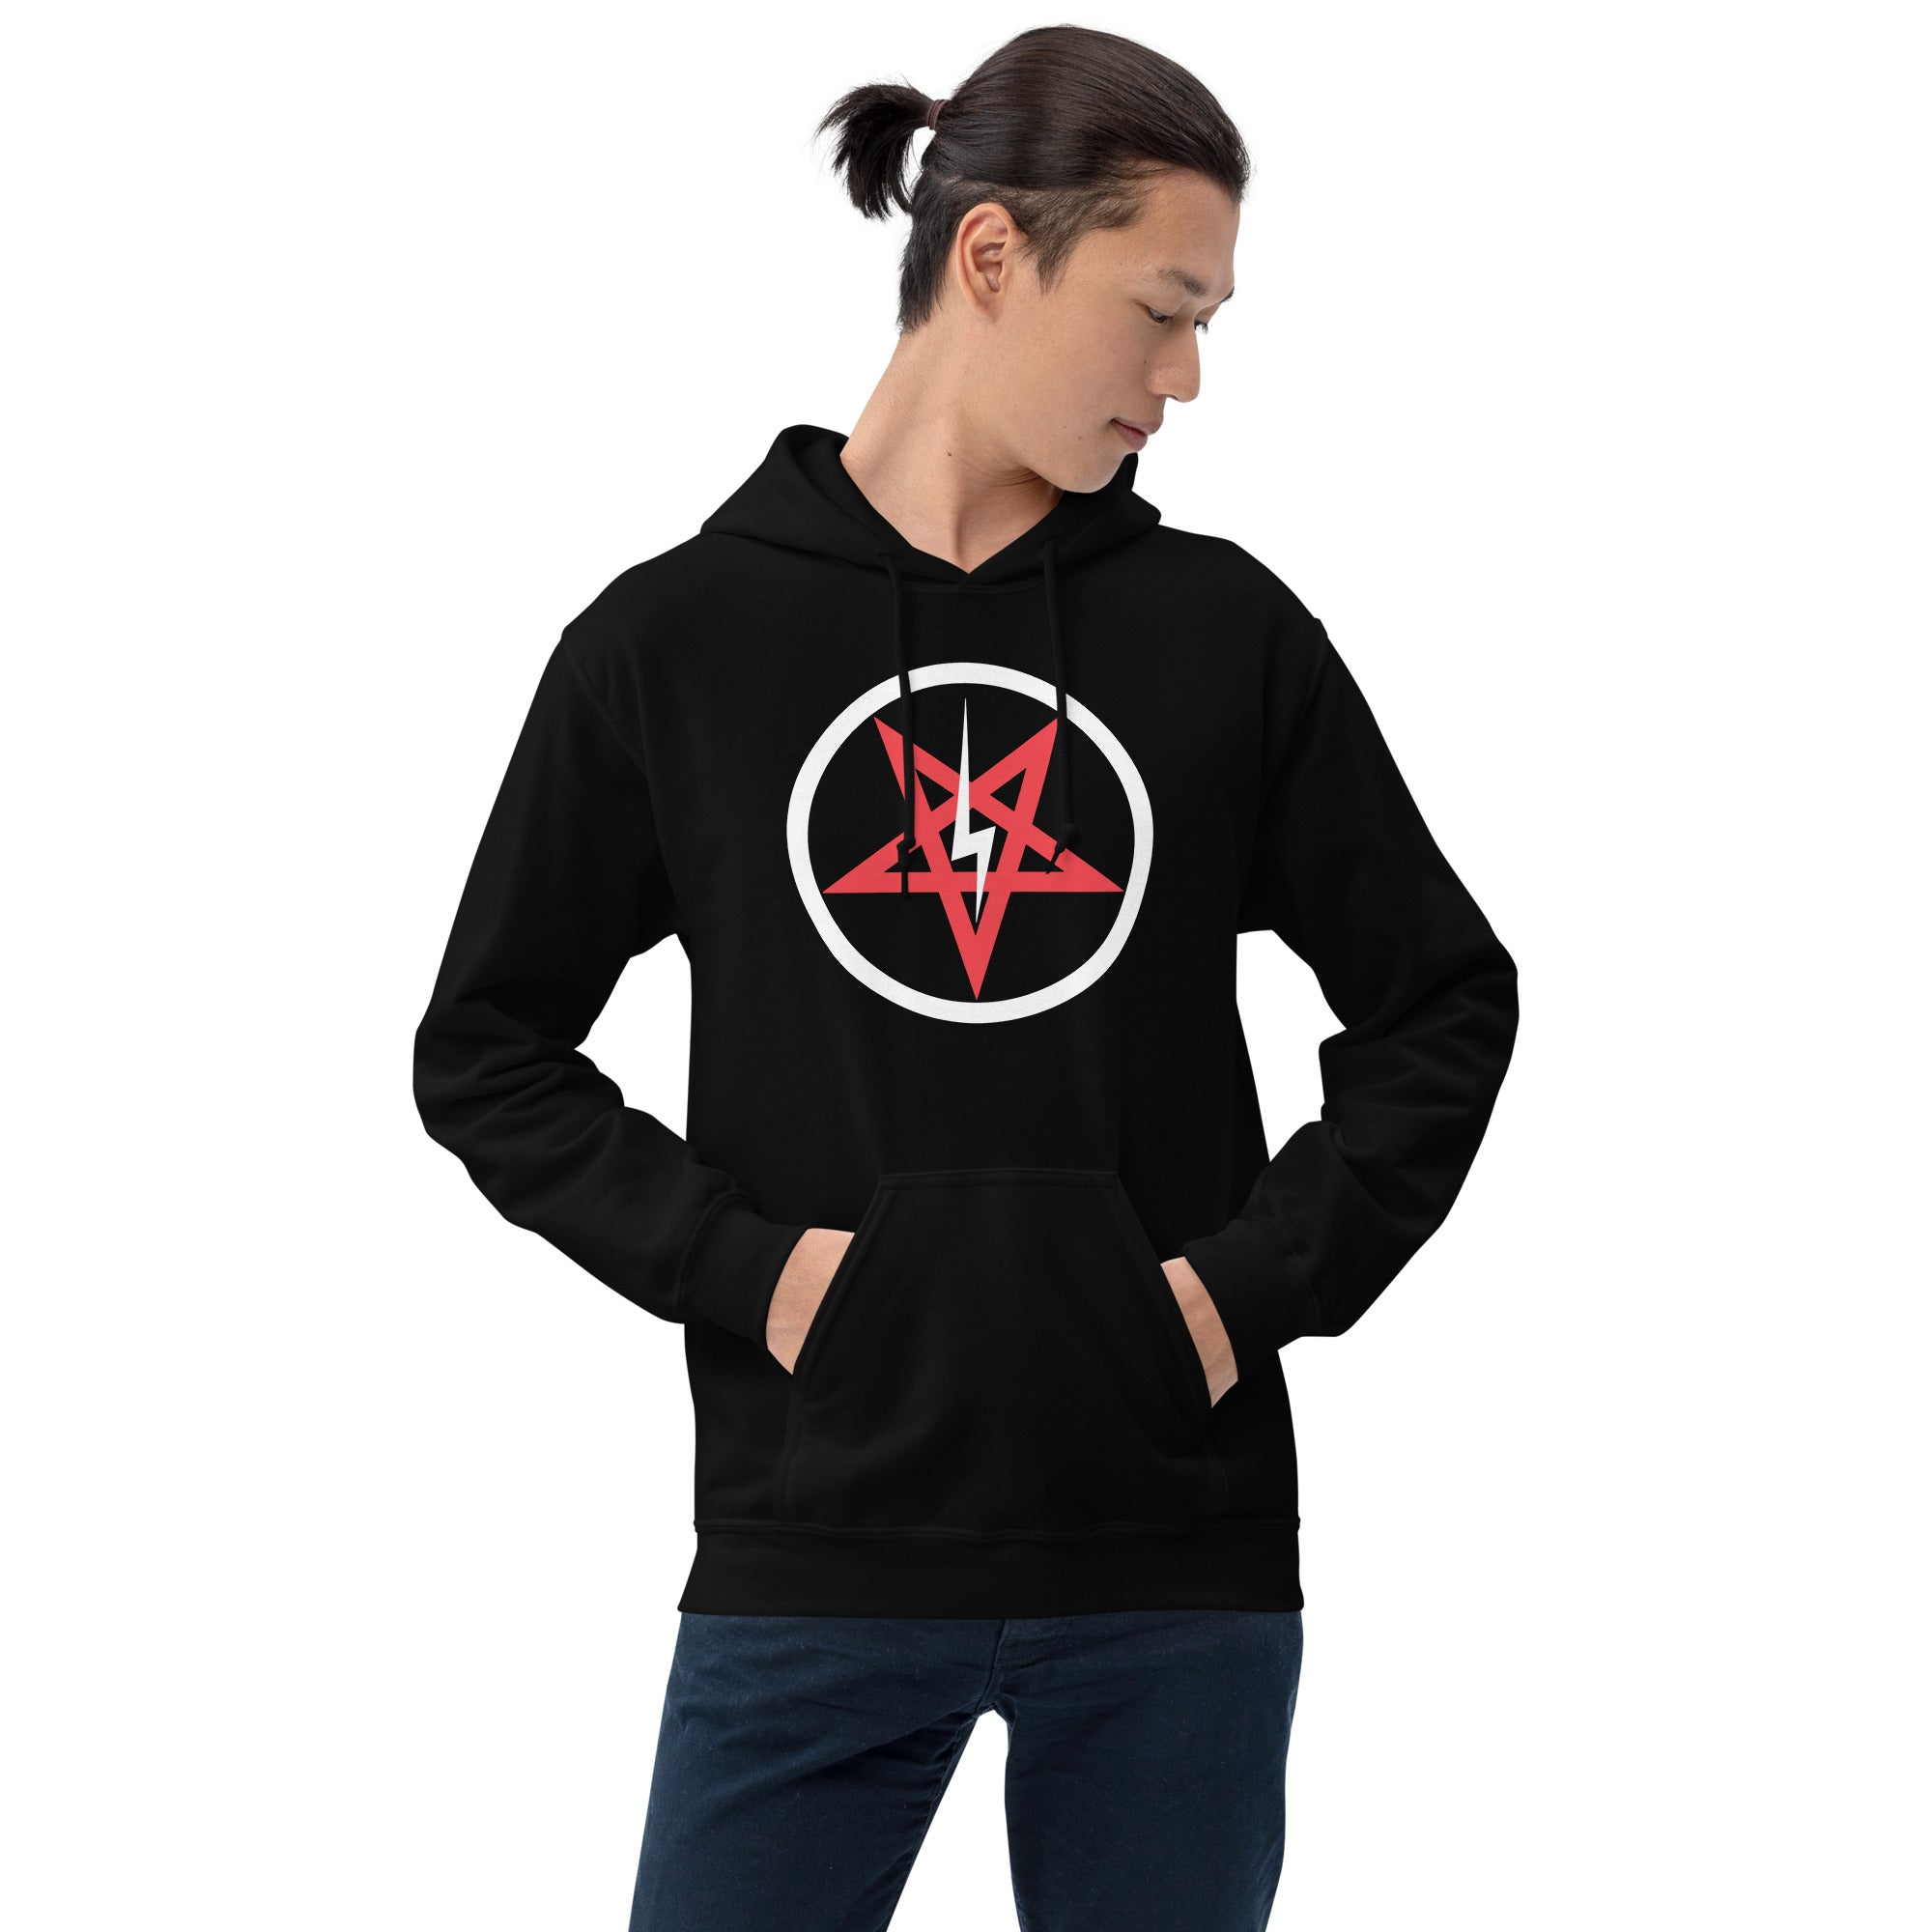 Satanic Church Sigil Bolt Inverted Pentagram Unisex Hoodie Sweatshirt - Edge of Life Designs